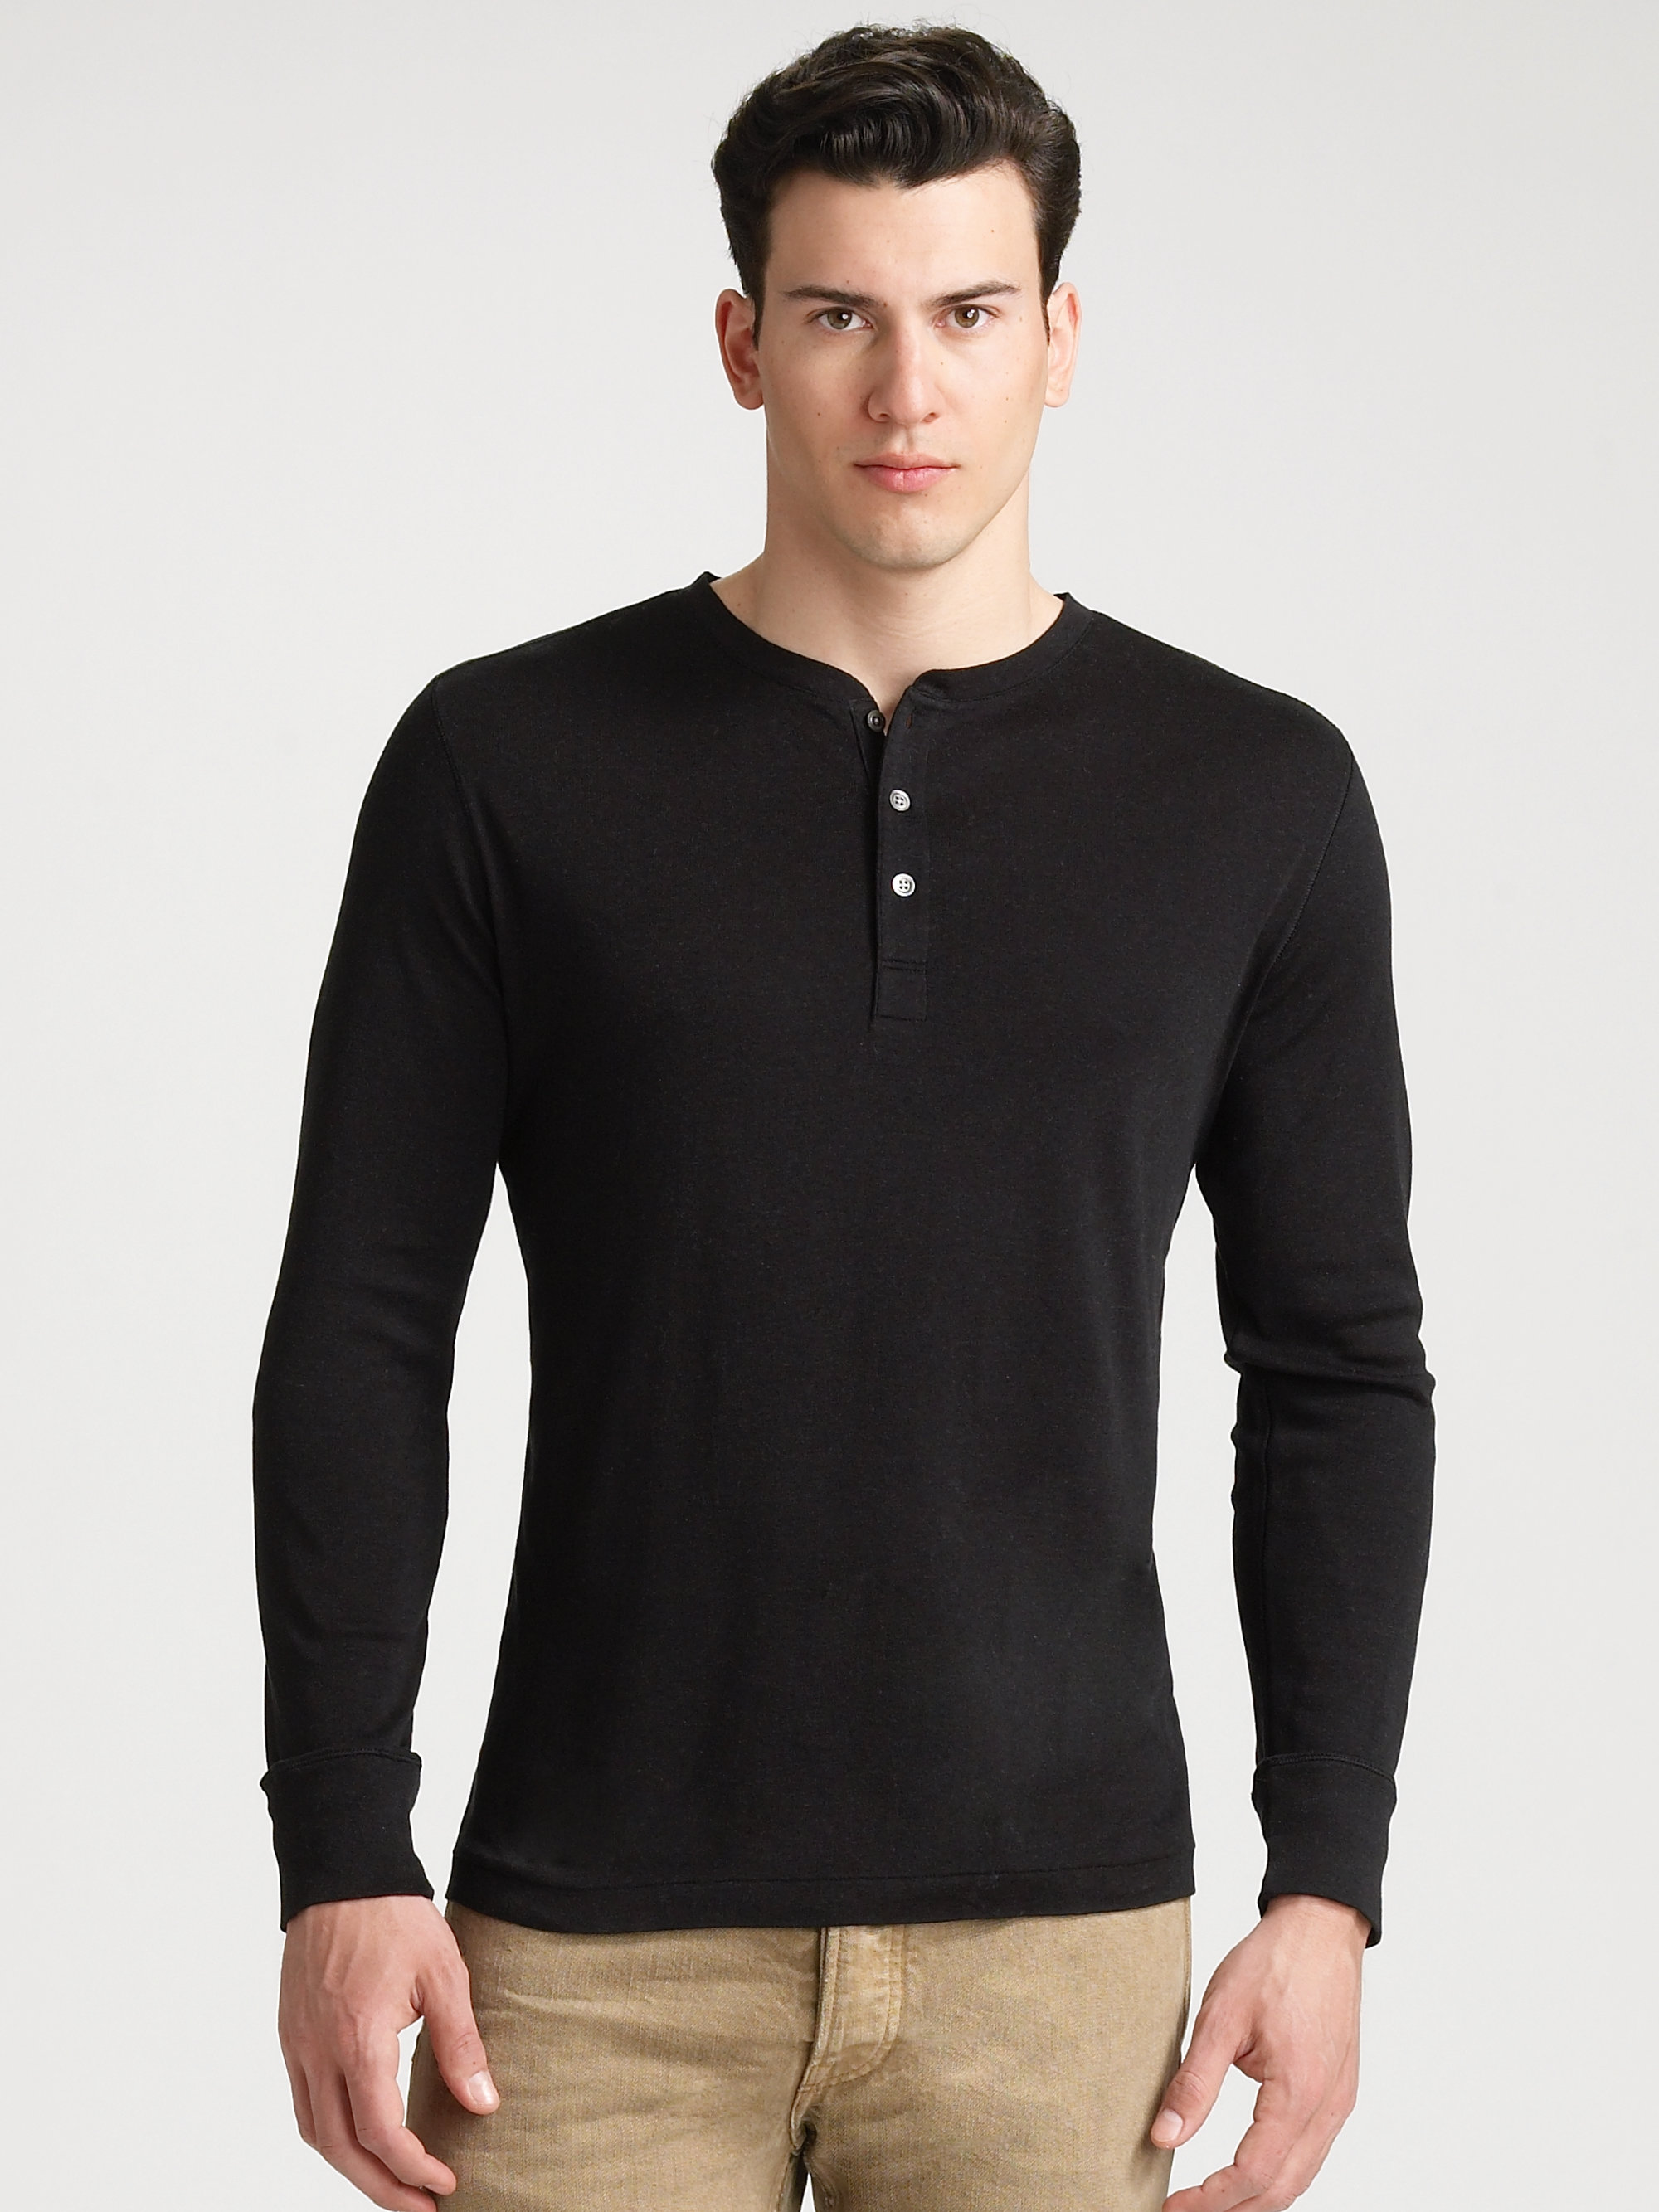 Lyst - Ralph Lauren Black Label Ribbed Henley Shirt in Black for Men